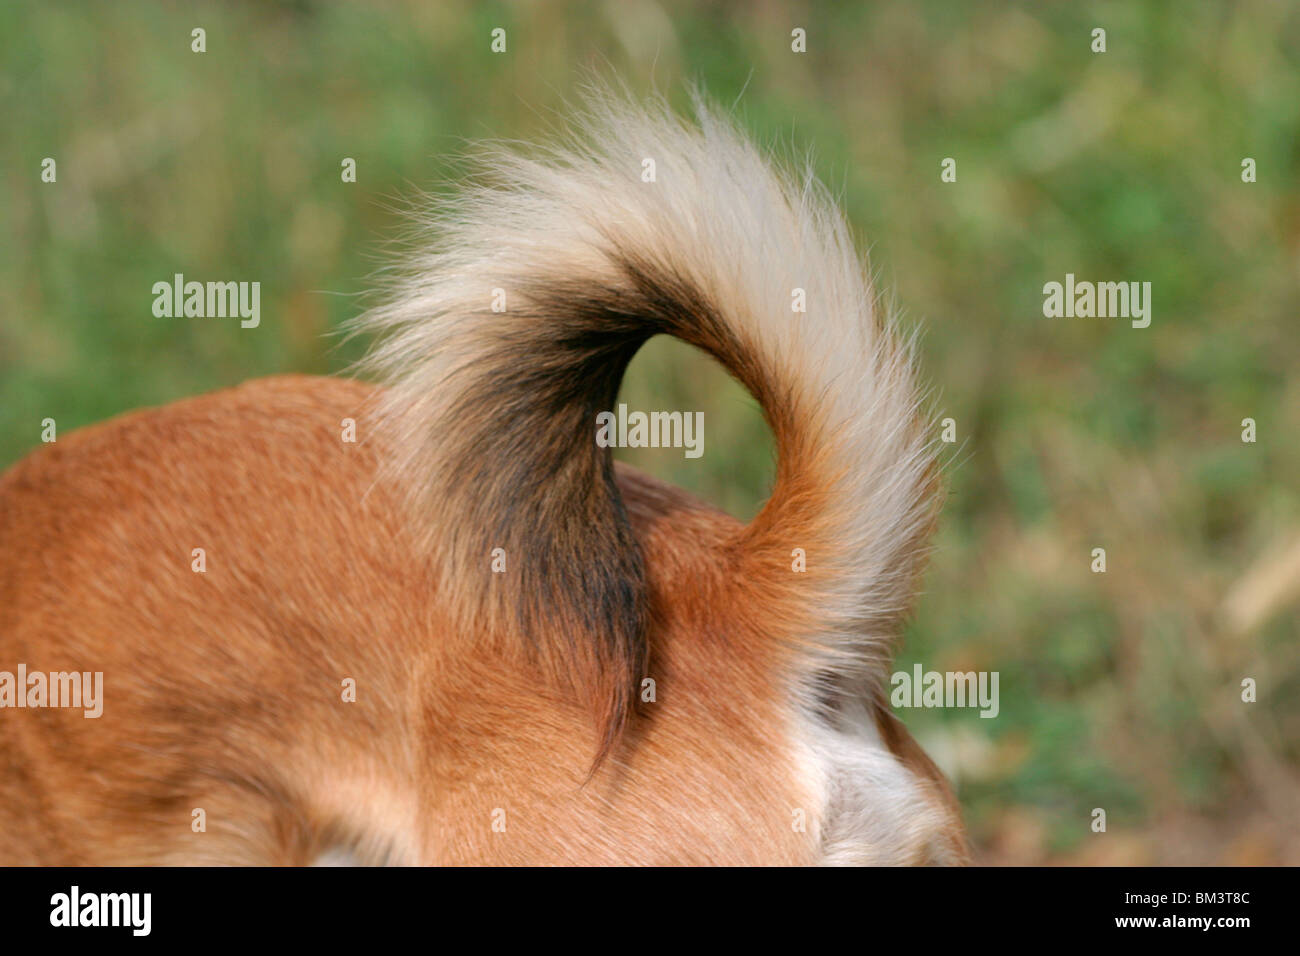 Hund Rute / dog Stock Photo - Alamy